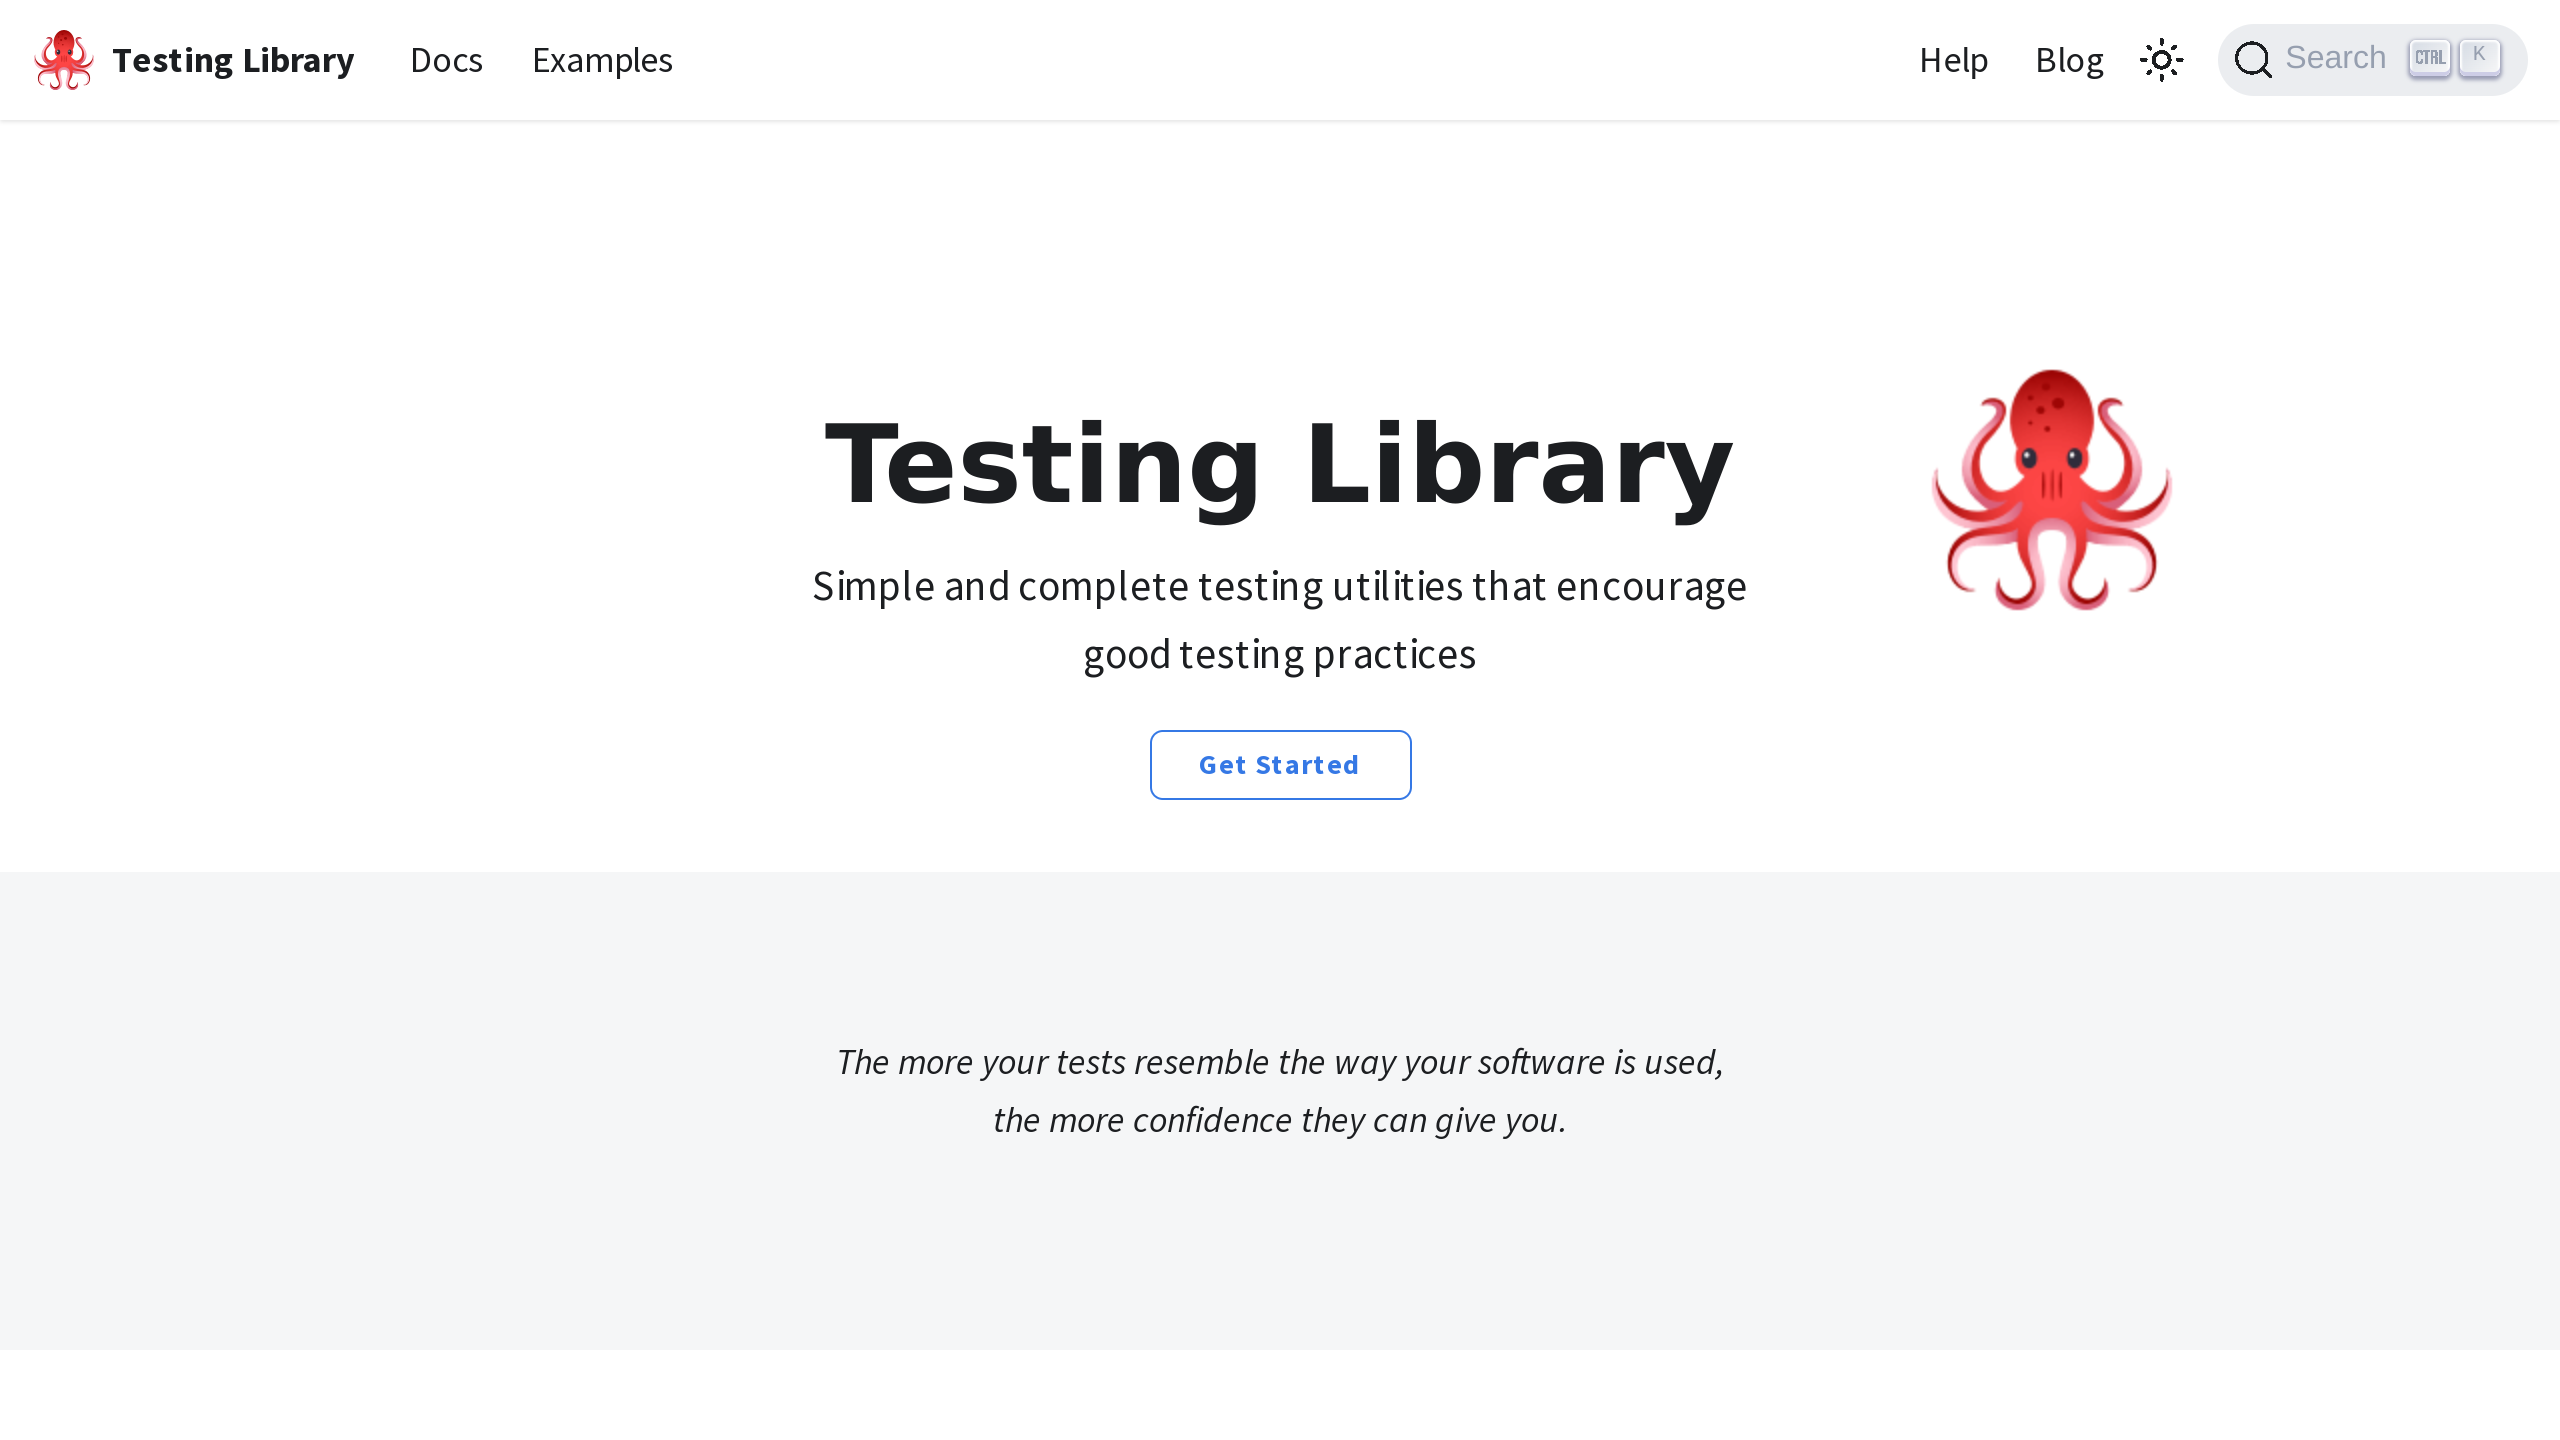 Testing Library's website screenshot